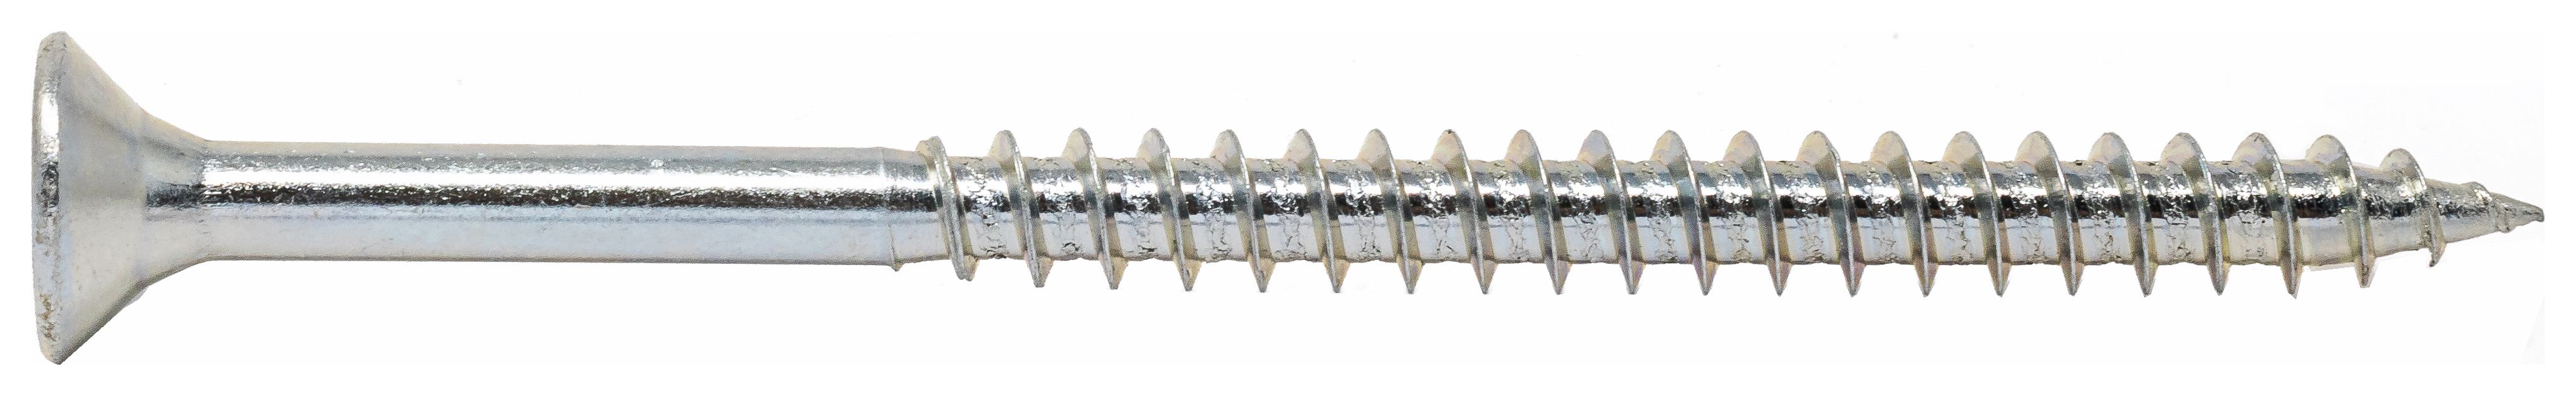 Wickes Single Thread Zinc Plated Screw - 4 X 50mm Pack Of 200